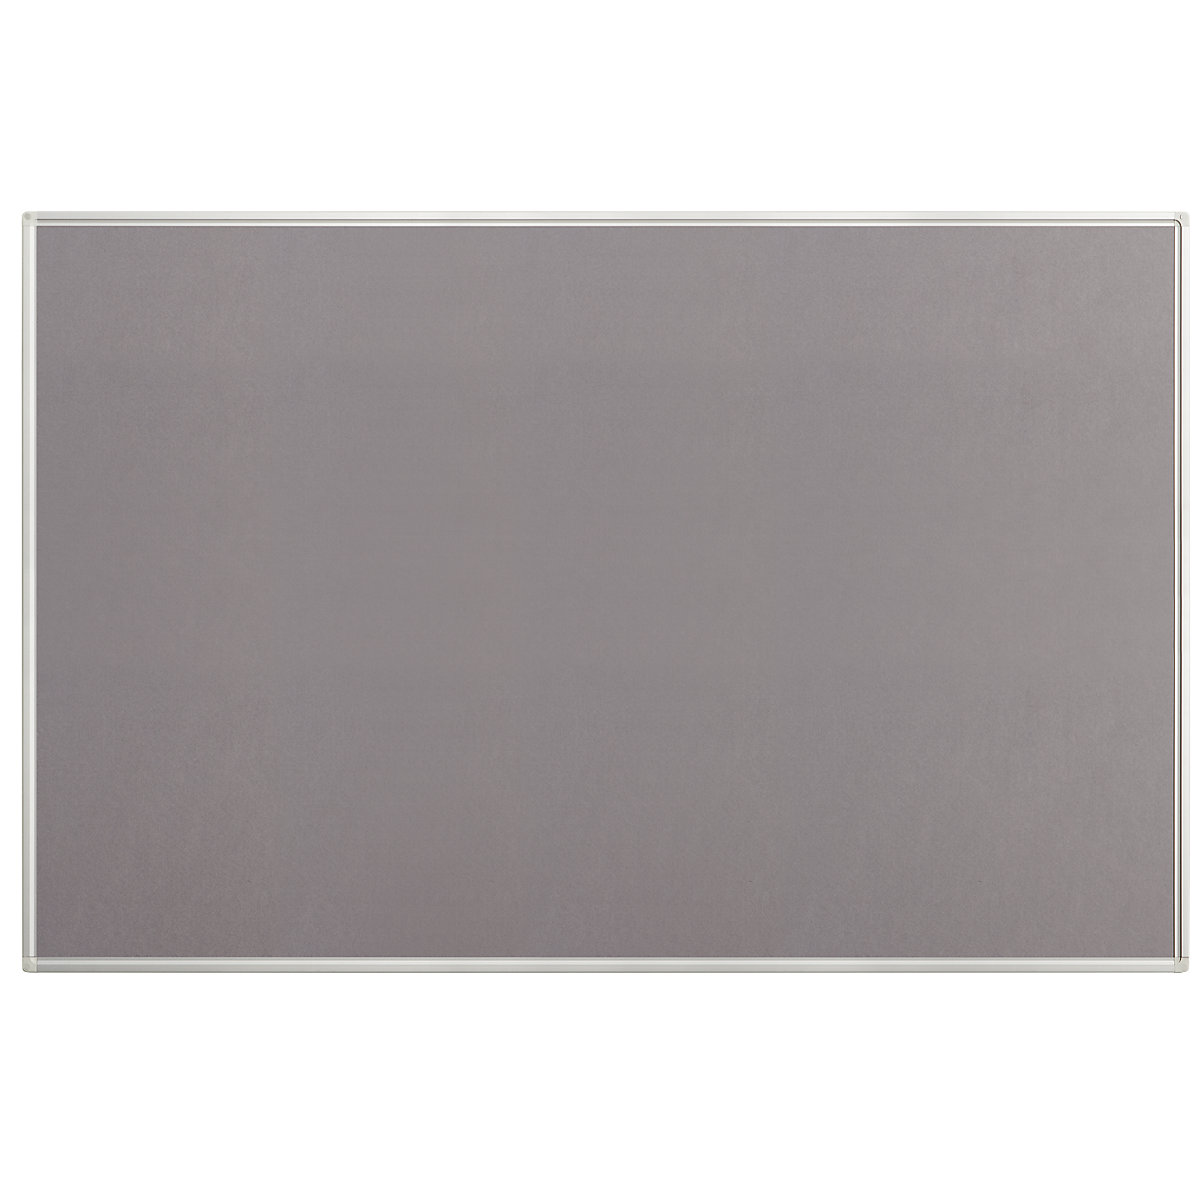 Tablón informativo para alfileres, fieltro gris, A x H 1500 x 1000 mm-3